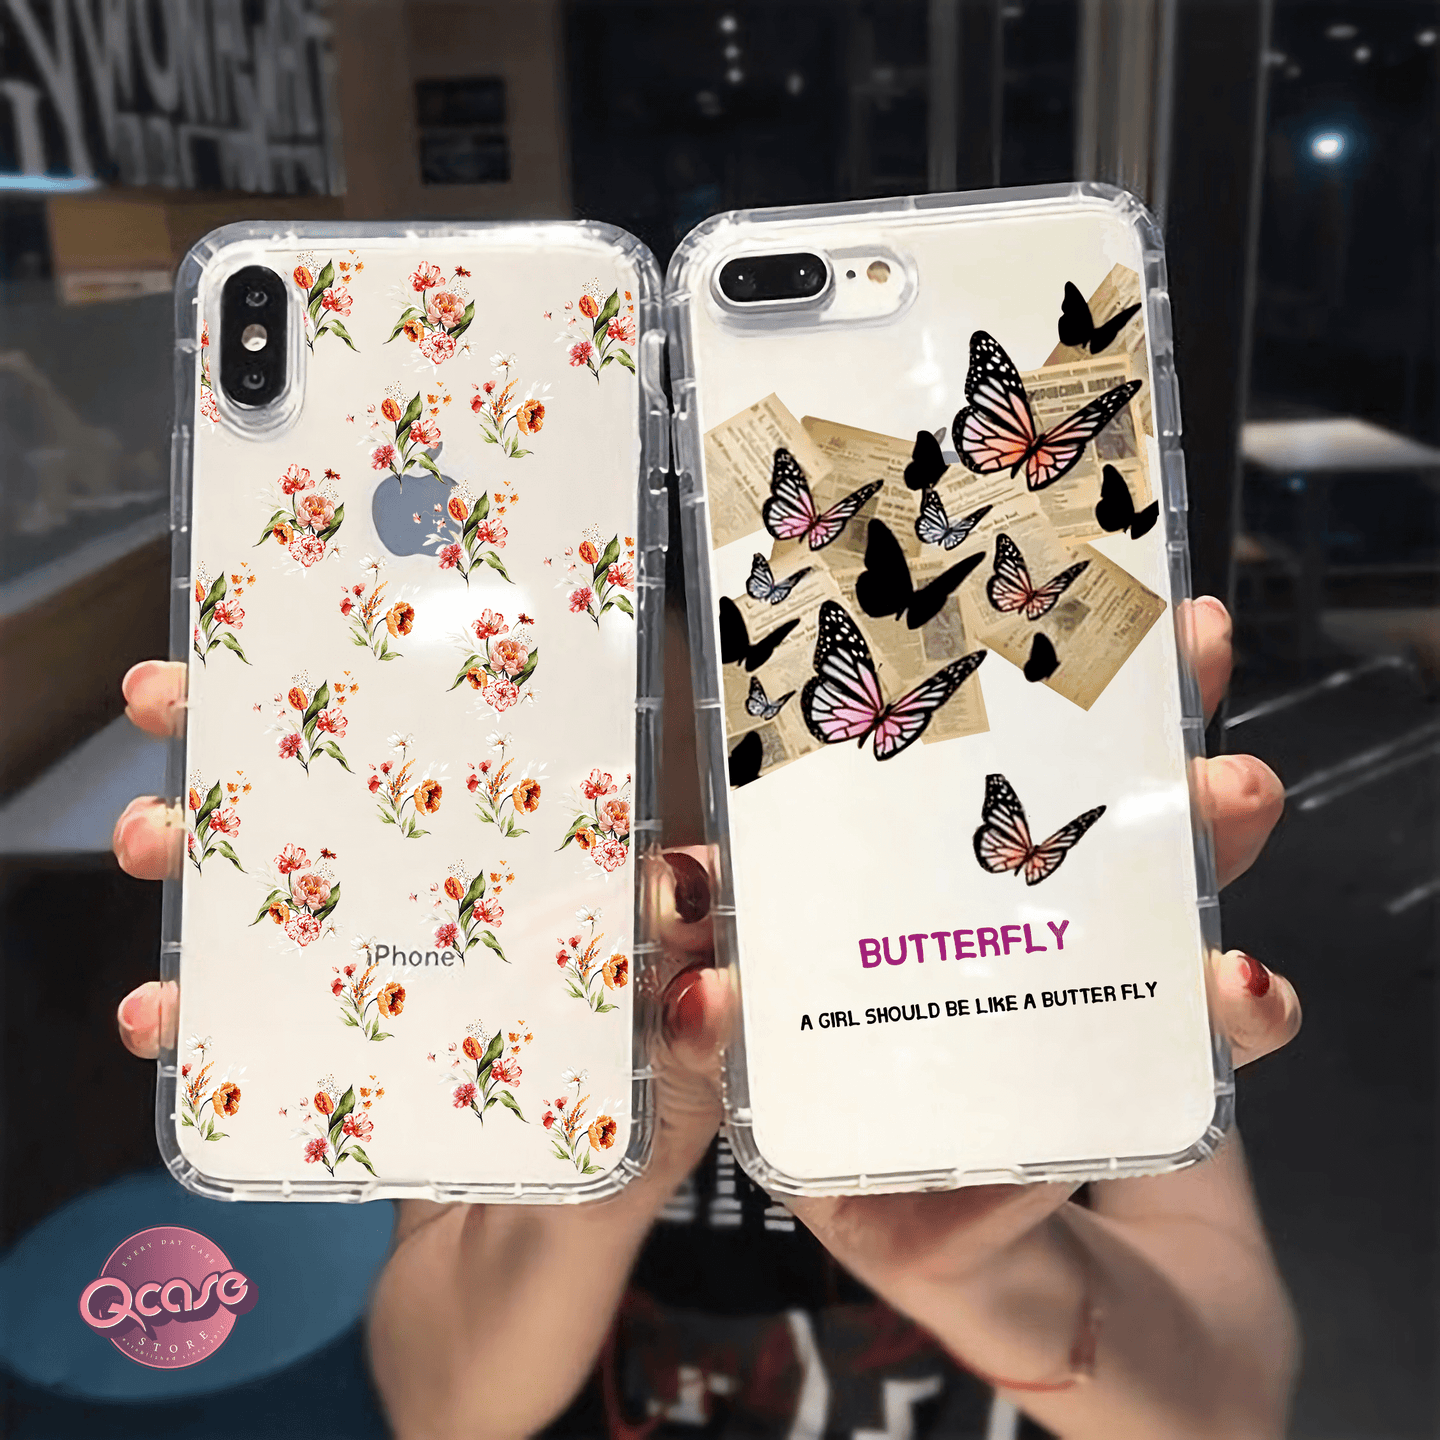 Butterflies Phone Covers